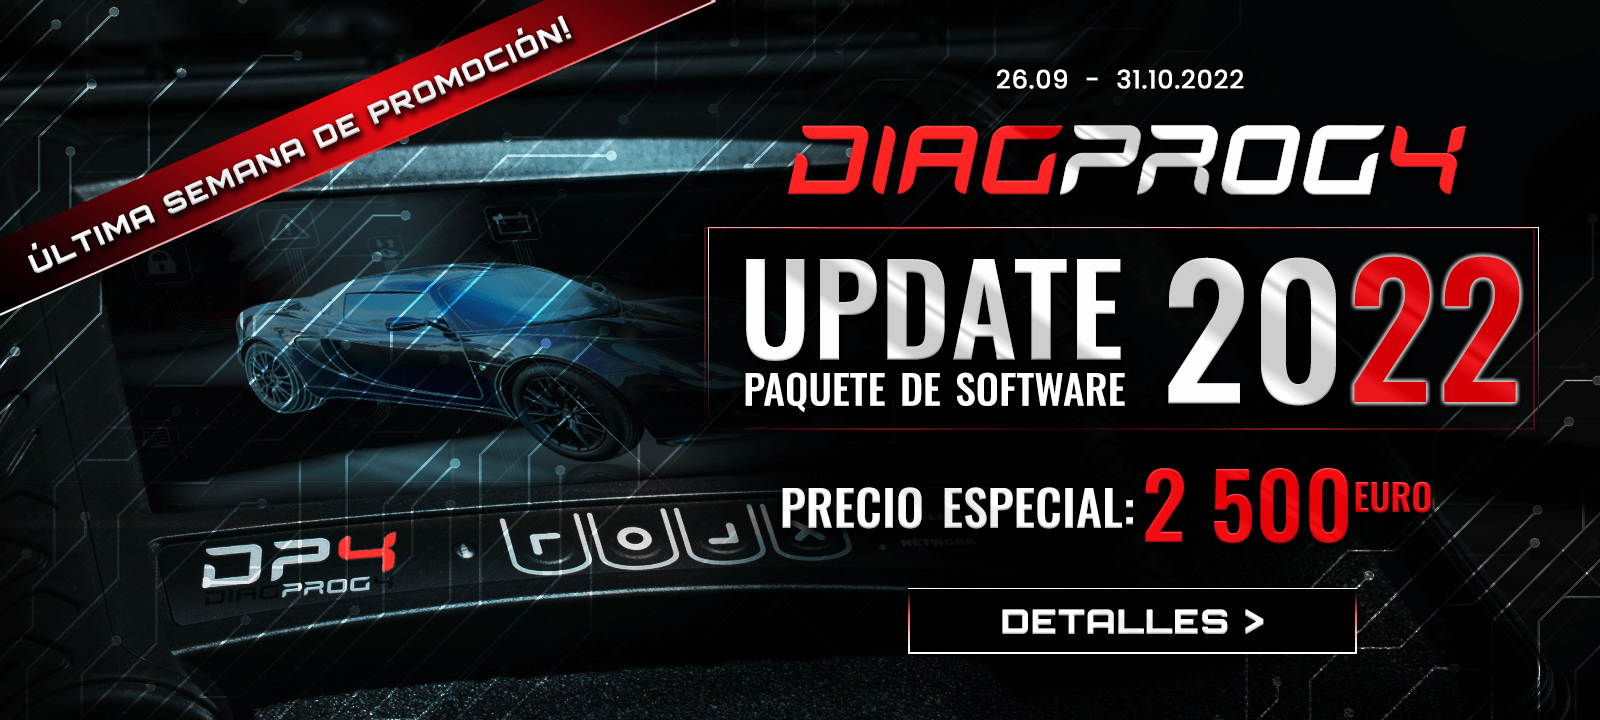 DiagProg4 - Update 2022_Promocion